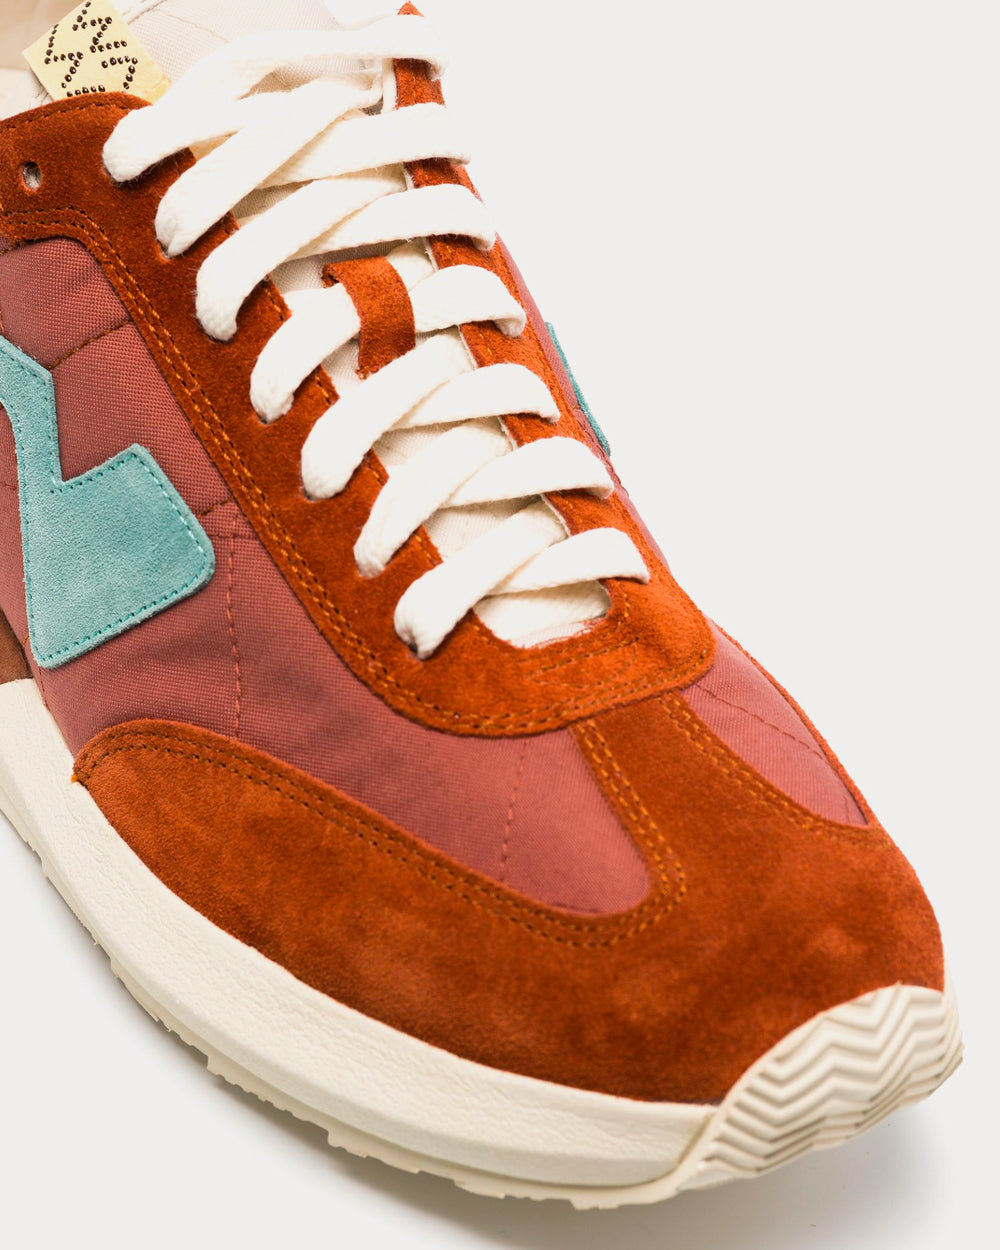 Visvim - FKT Runner Orange Low Top Sneakers